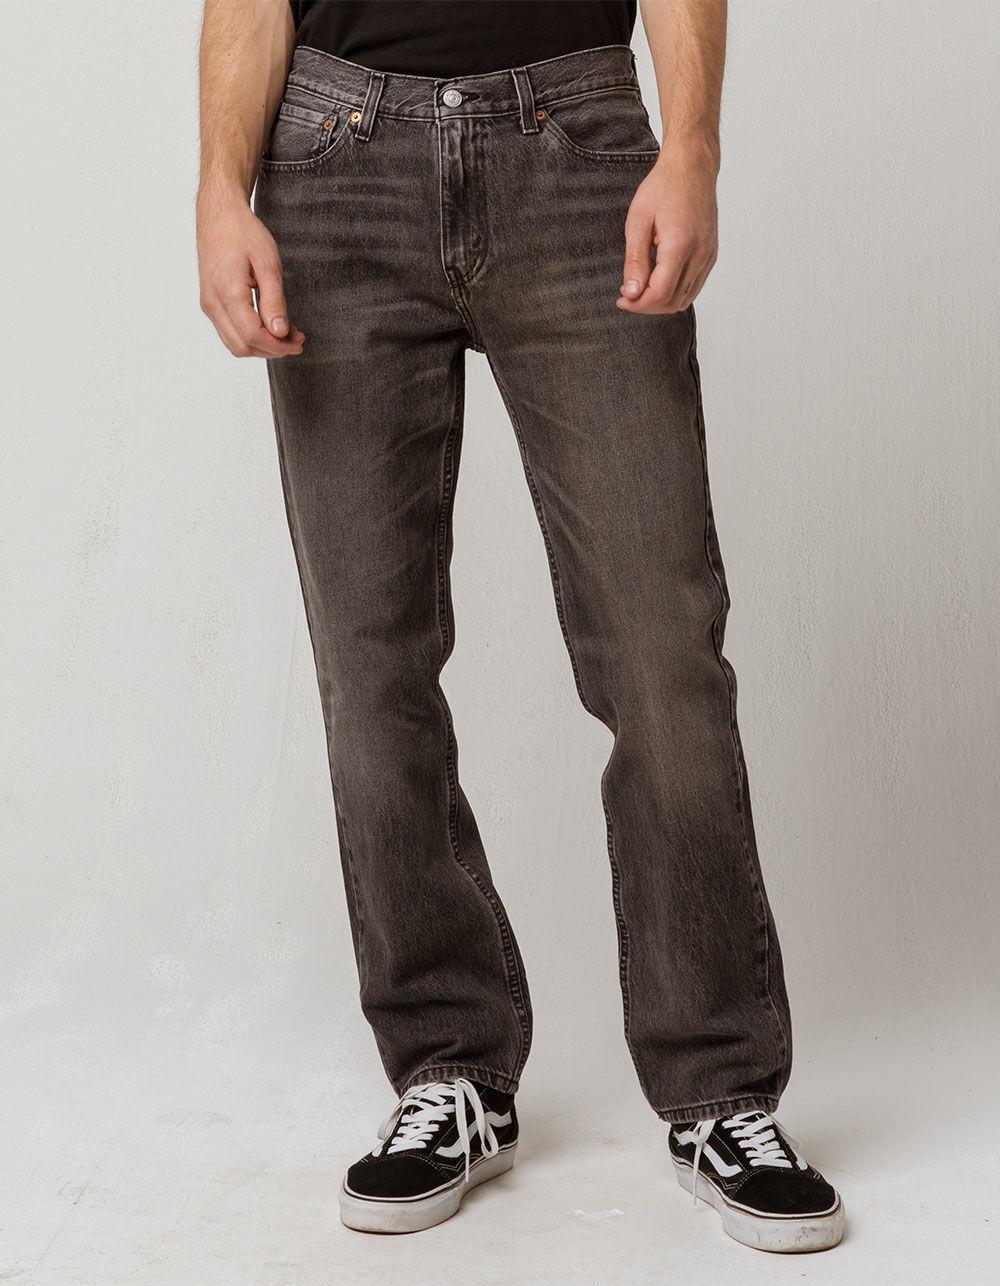 Levis 541 Grey Jeans Online, SAVE 50% - carolineellisoncounselling.co.uk